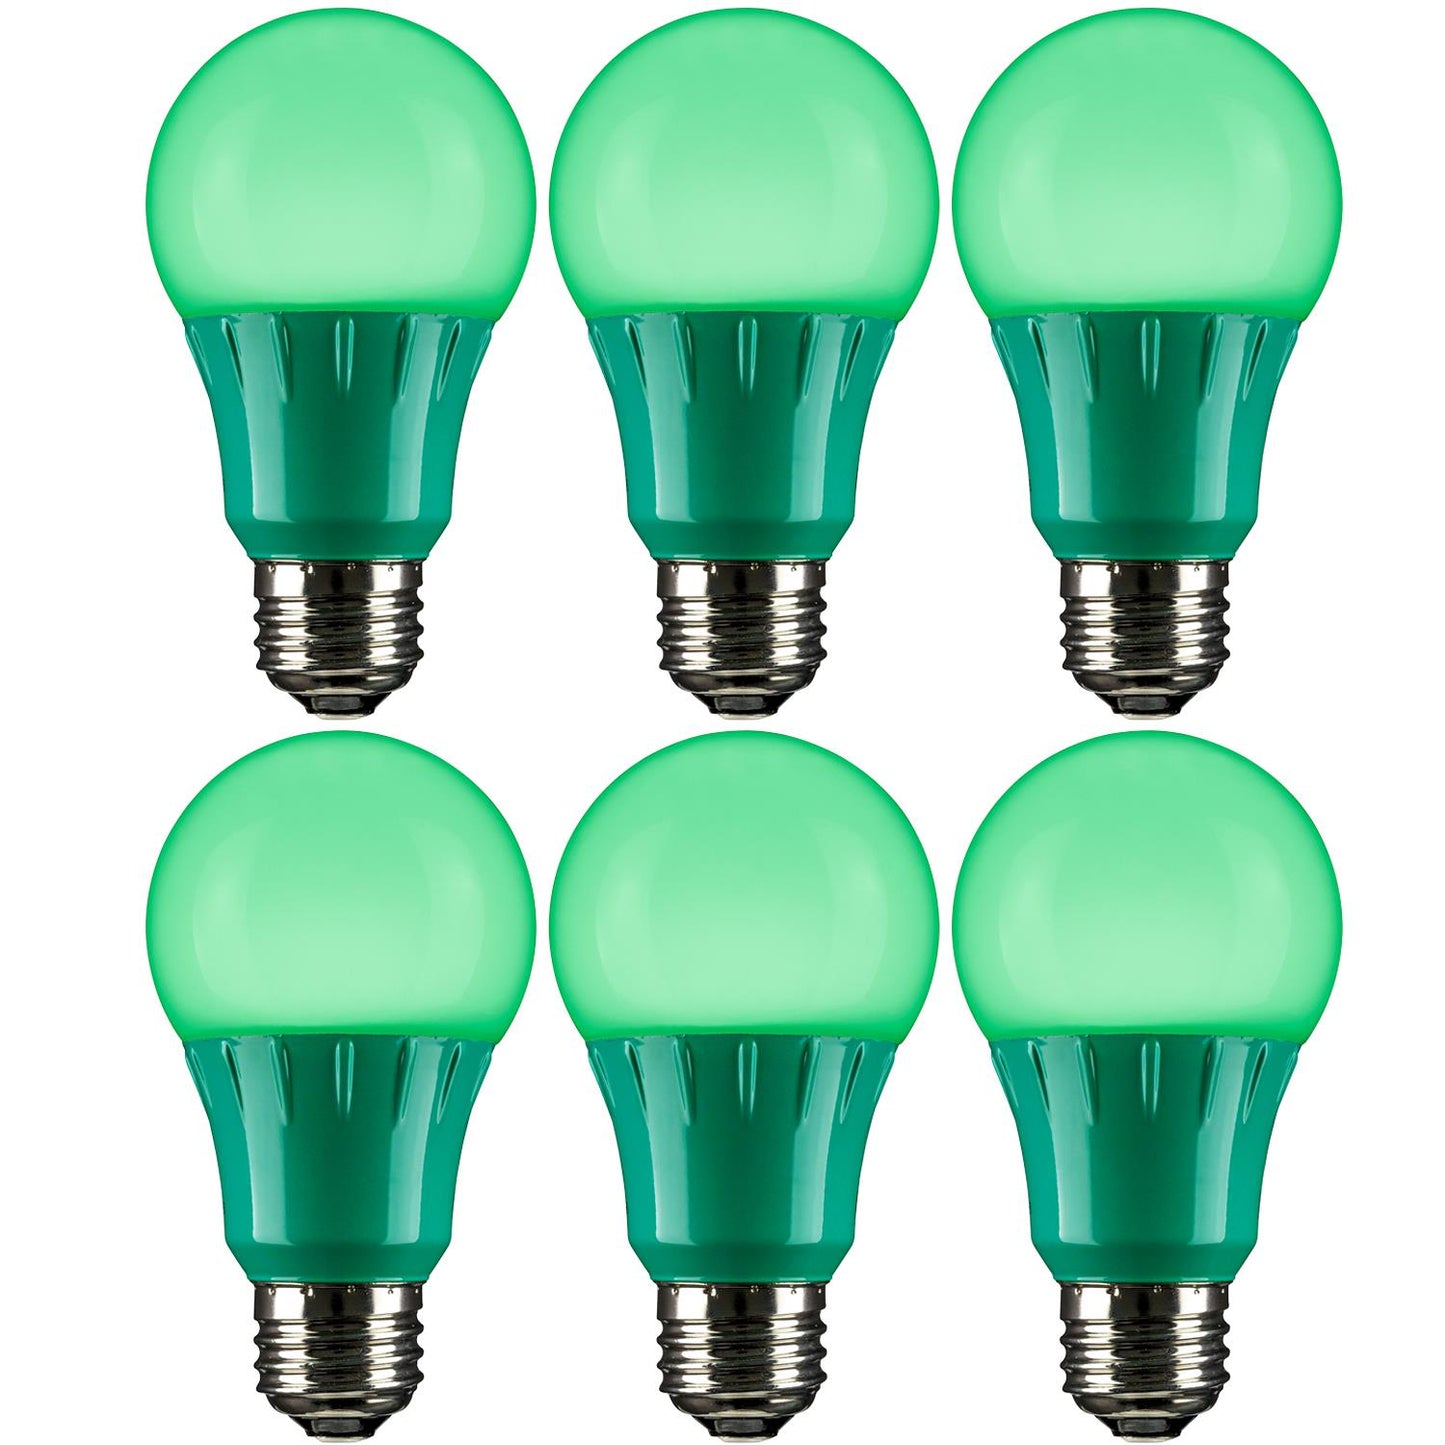 Sunlite LED A Type Colored 3W Light Bulb Medium (E26) Base, Green